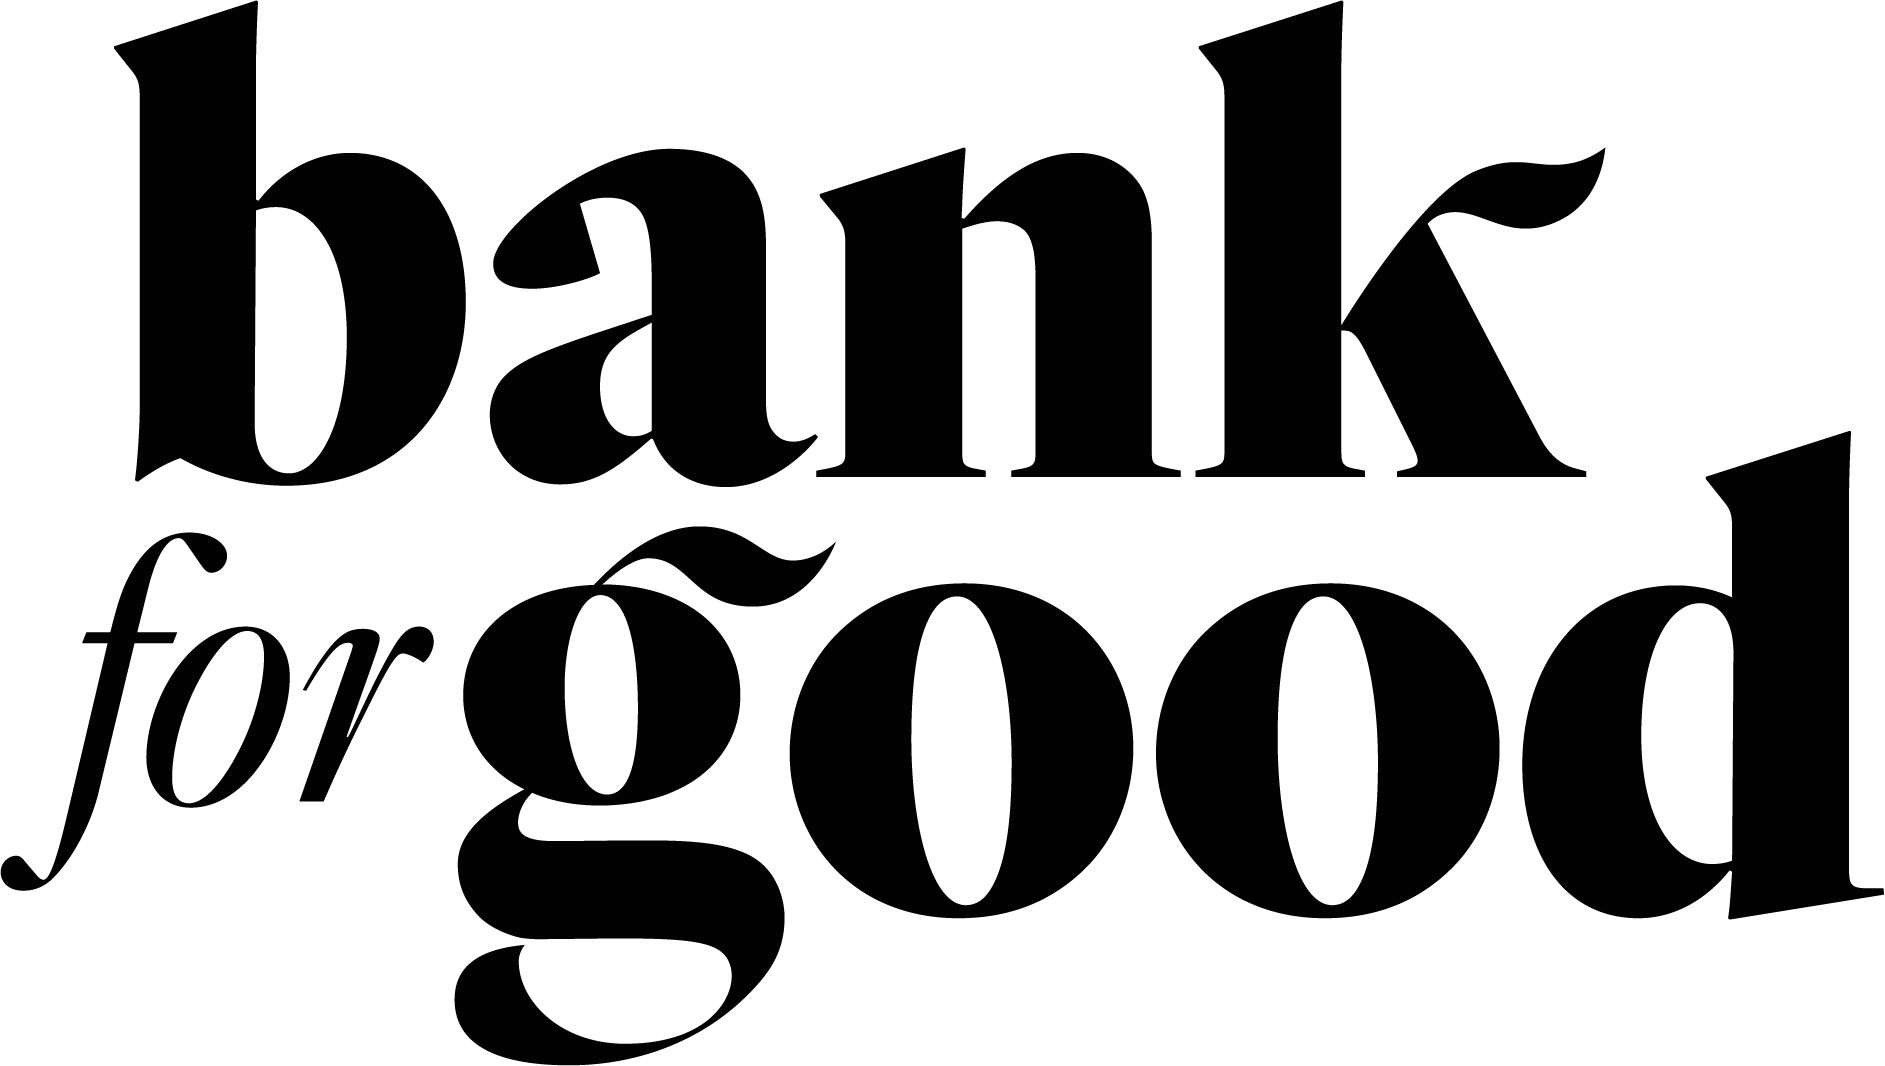 Bank for Good logo